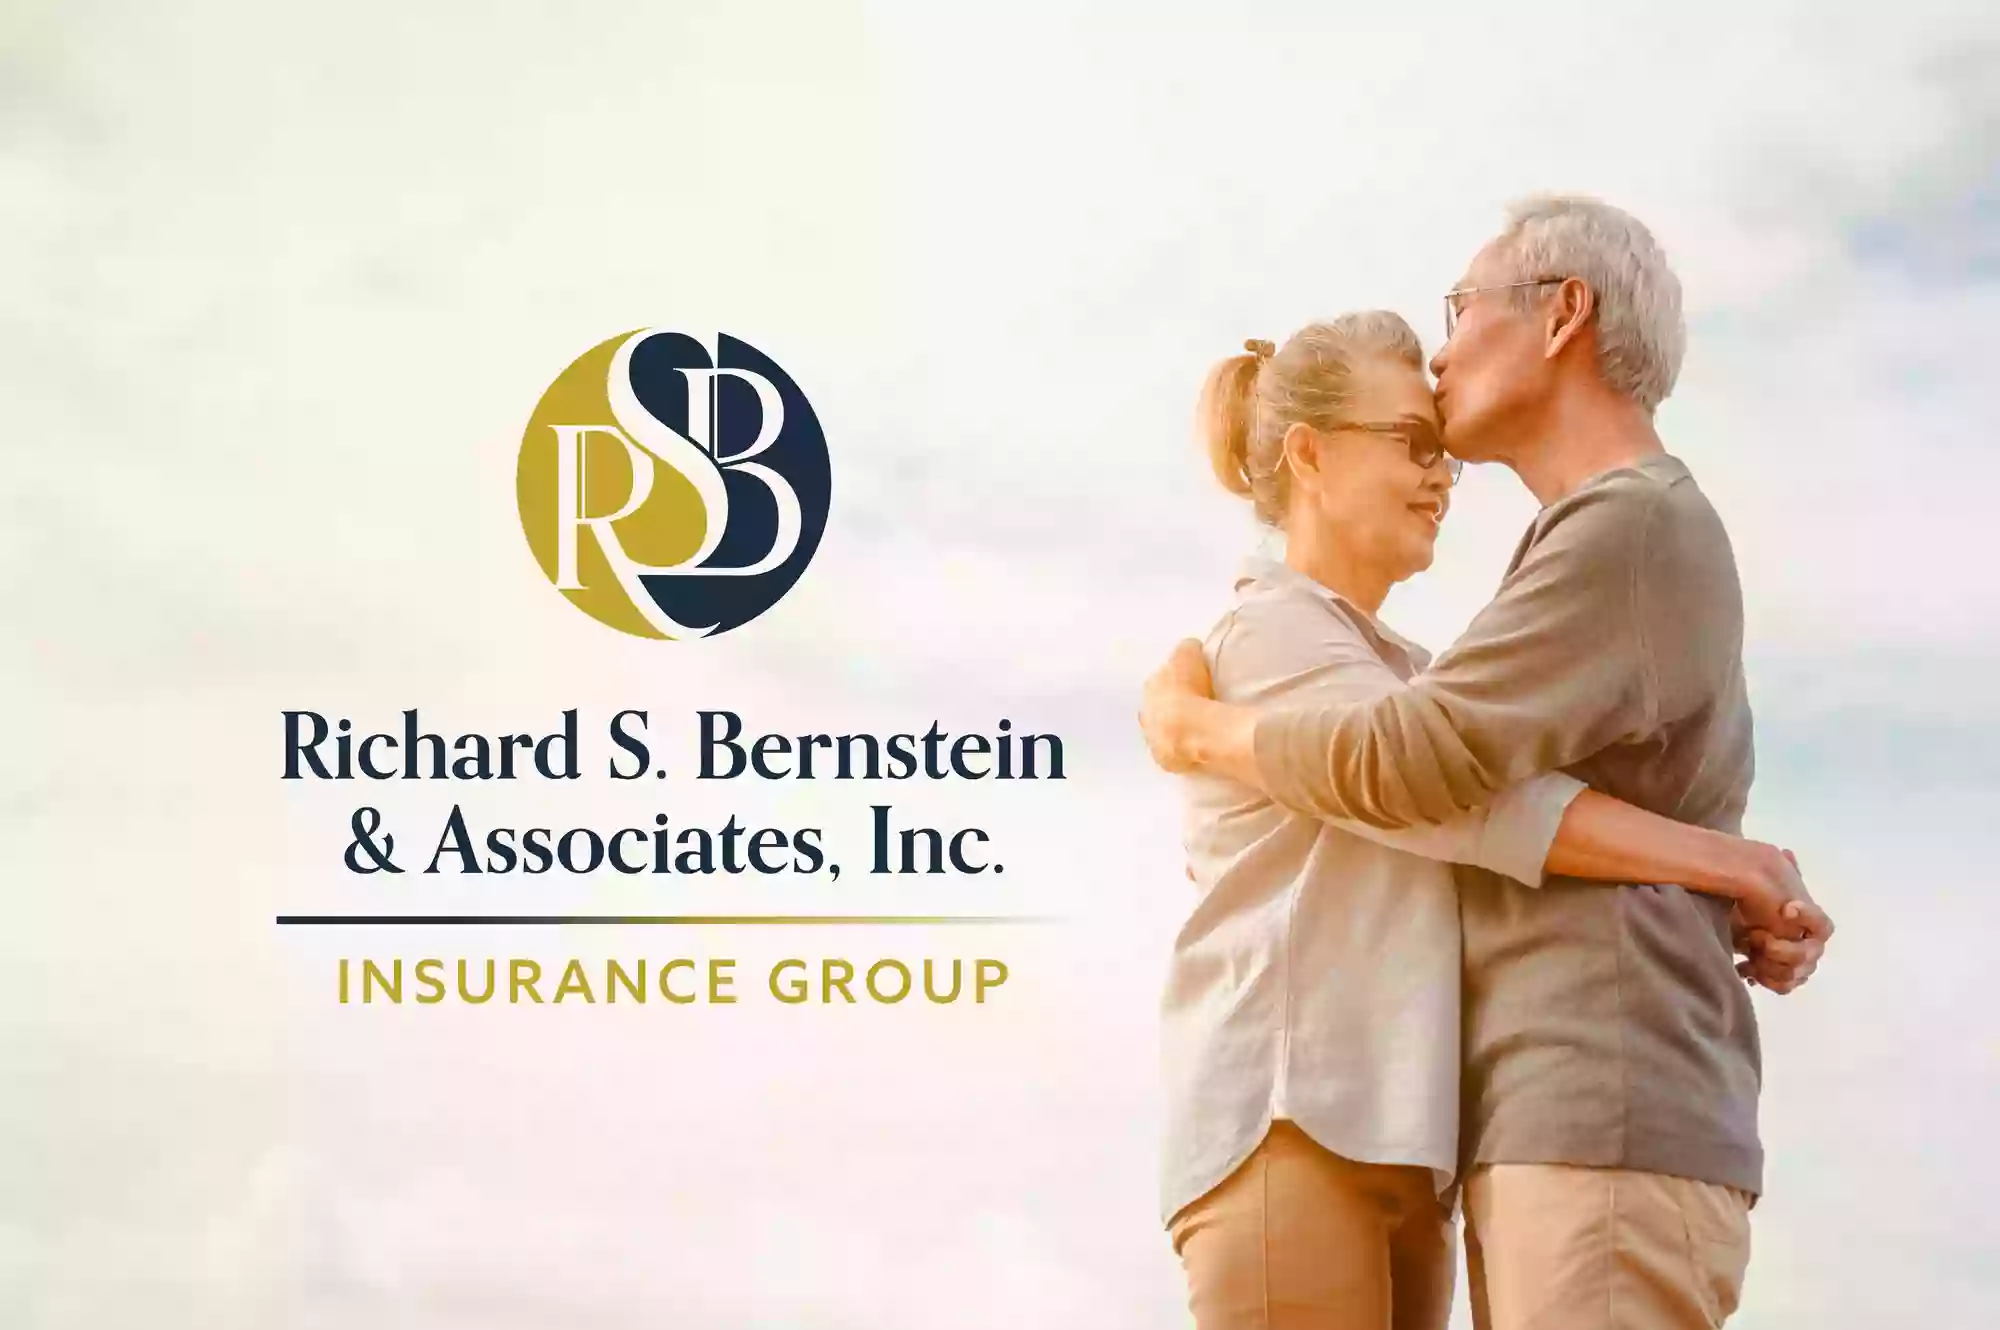 Richard S. Bernstein & Associates, Inc.